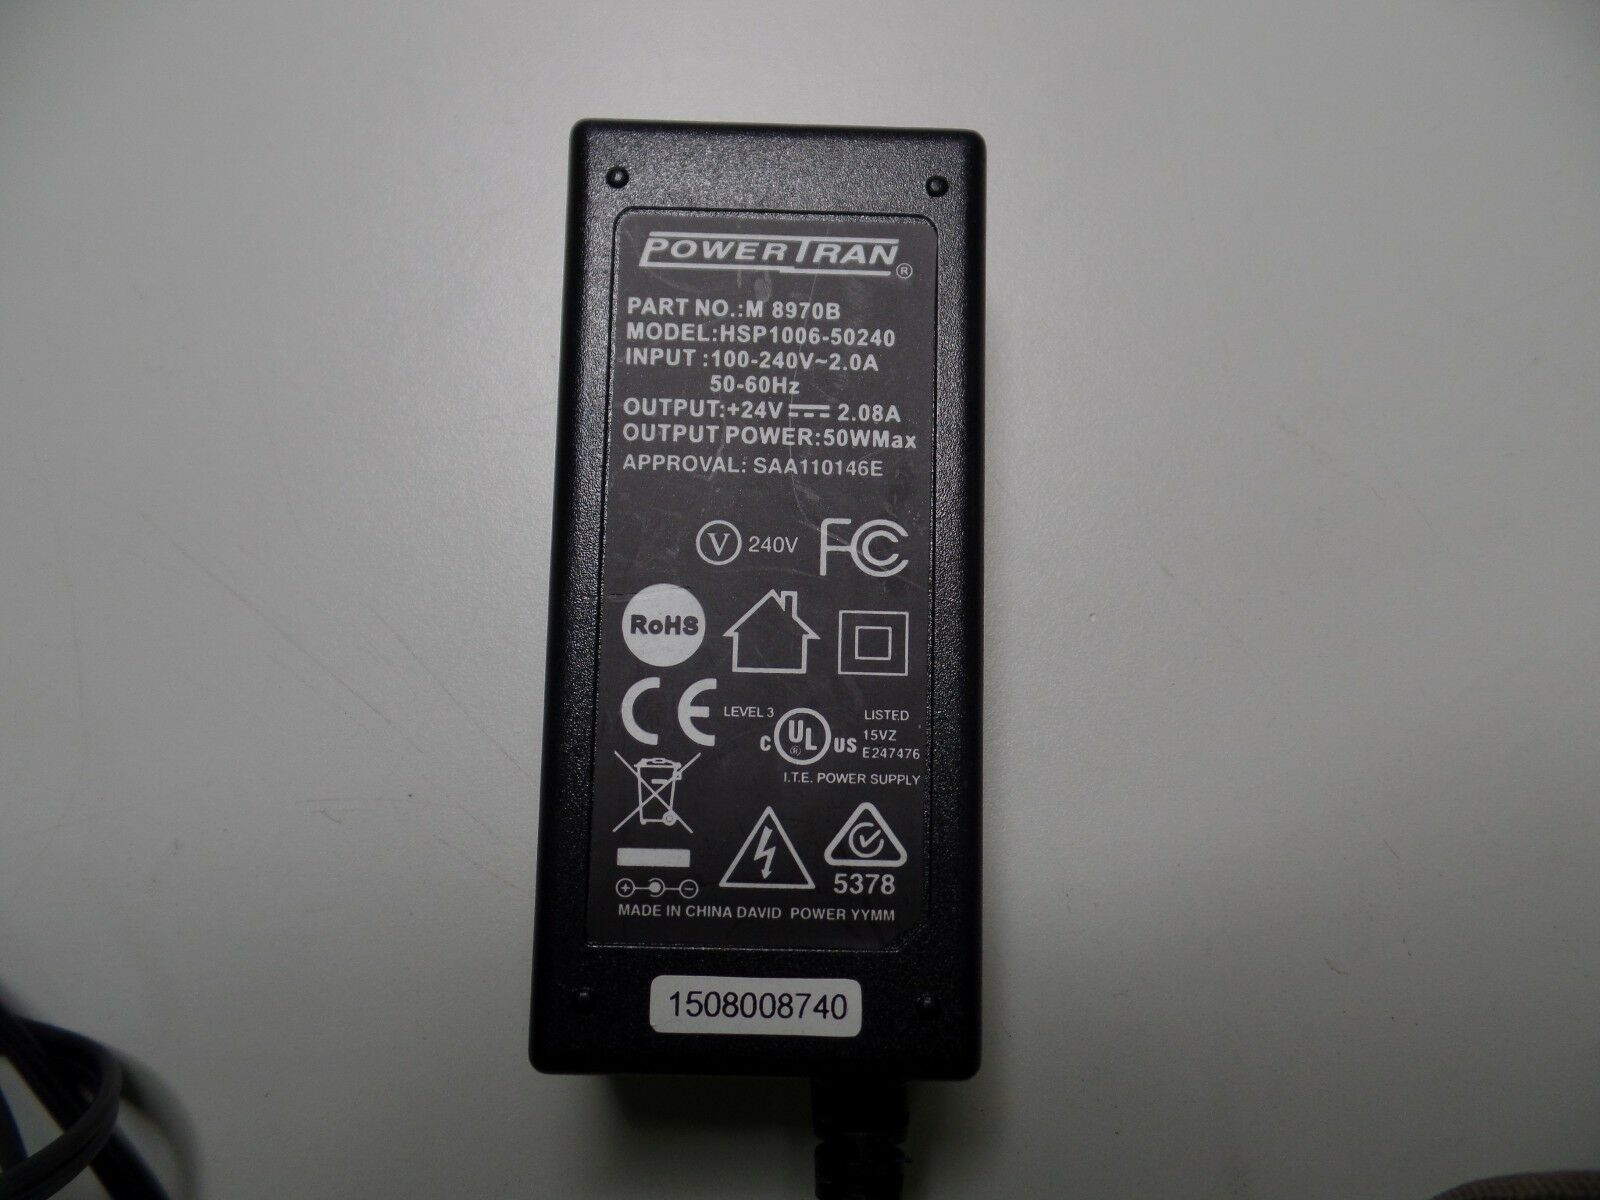 Powertran M 8970B HSP1006-50240 24V 2.08A AC Adapter 2.1mm DCJack for Appliances Specification: Manufacturer: PowerTra